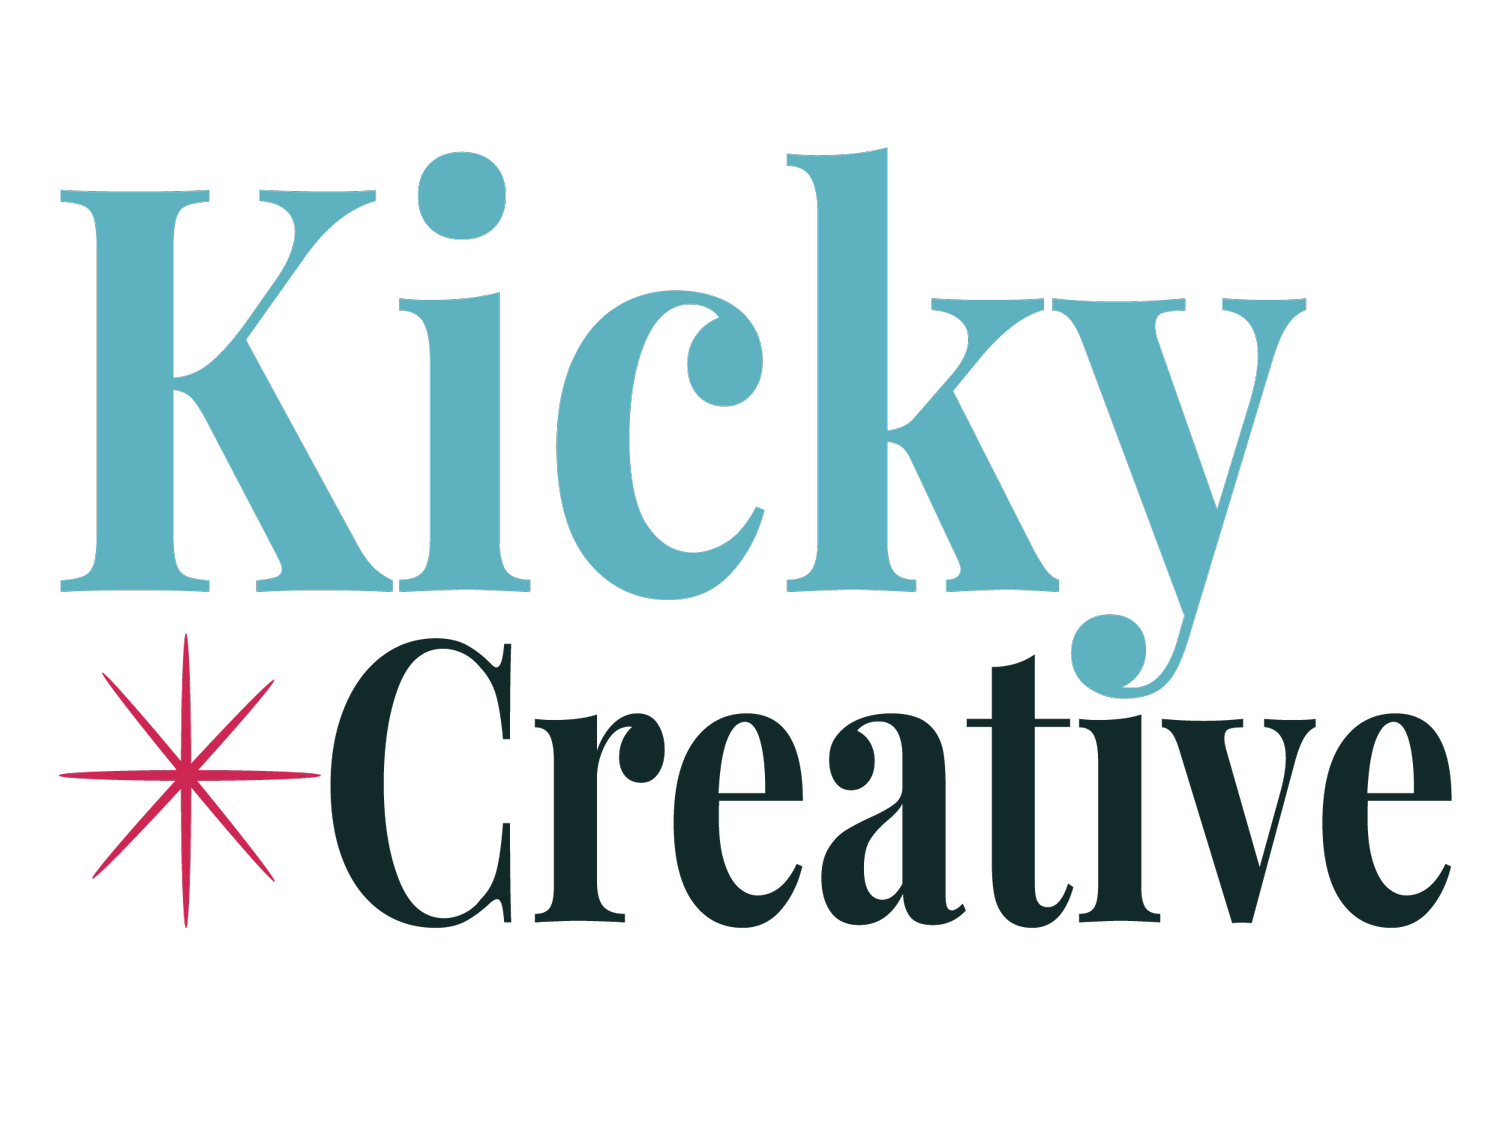 Kicky Creative/Website Logo Design Copy Editing